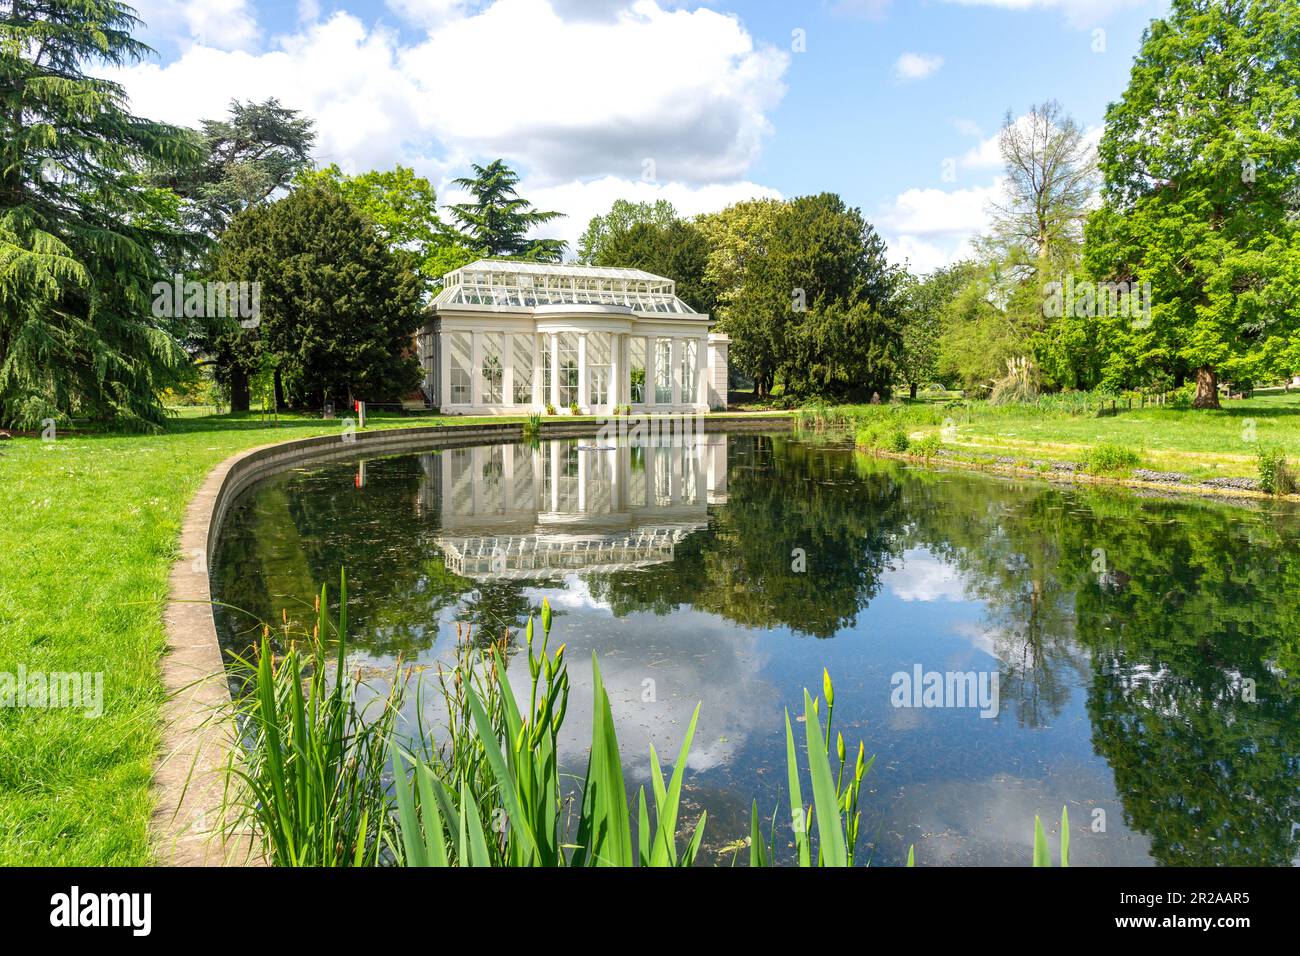 L'Orangerie de Horseshoe Pond, Gunnersbury Park, Gunnersbury, Royal Borough of Kensington & Chelsea, Greater London, Angleterre, Royaume-Uni Banque D'Images